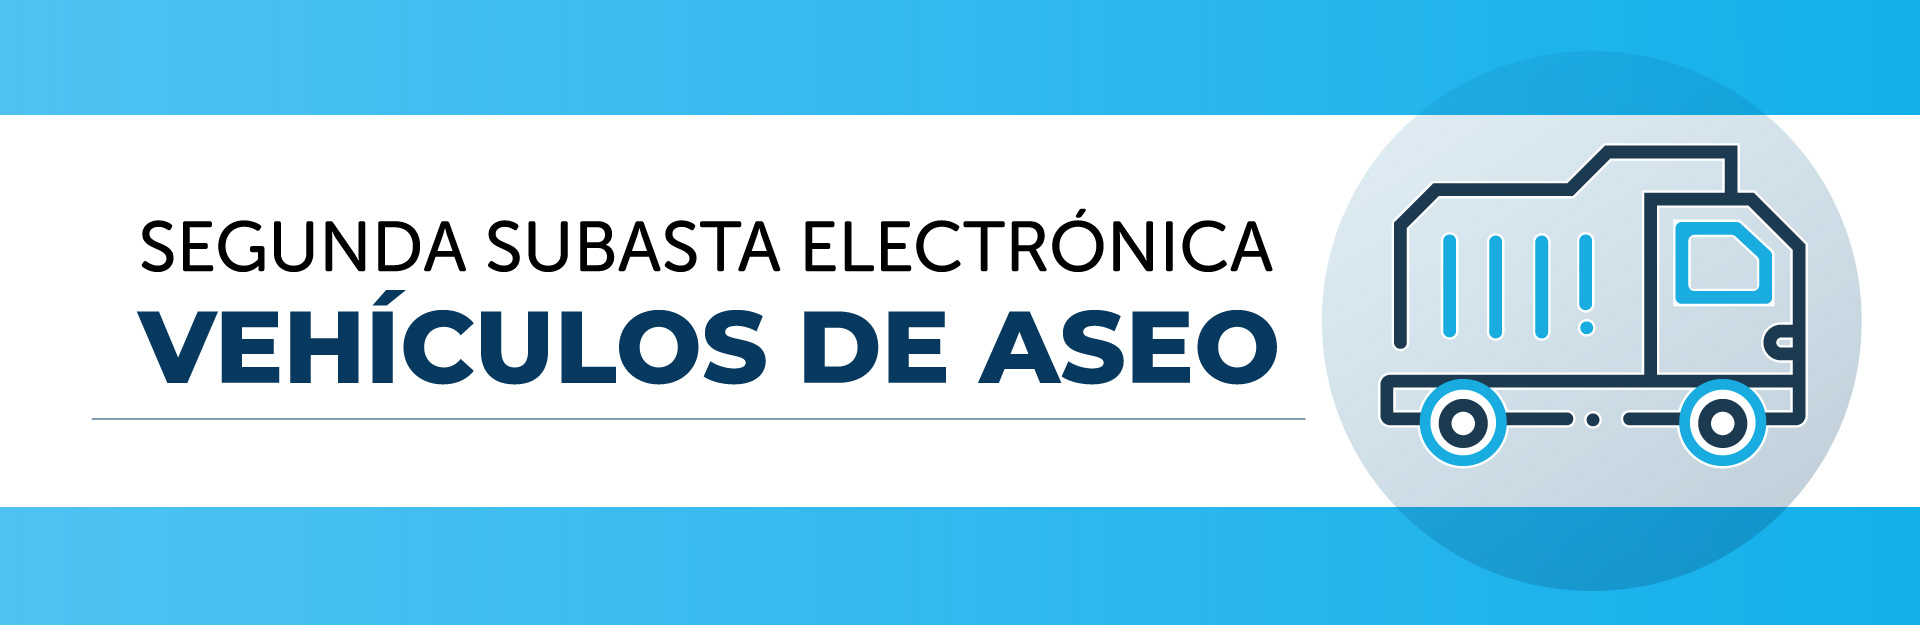 SEGUNDA SUBASTA ELECTRÓNICA VEHÍCULOS DE ASEO